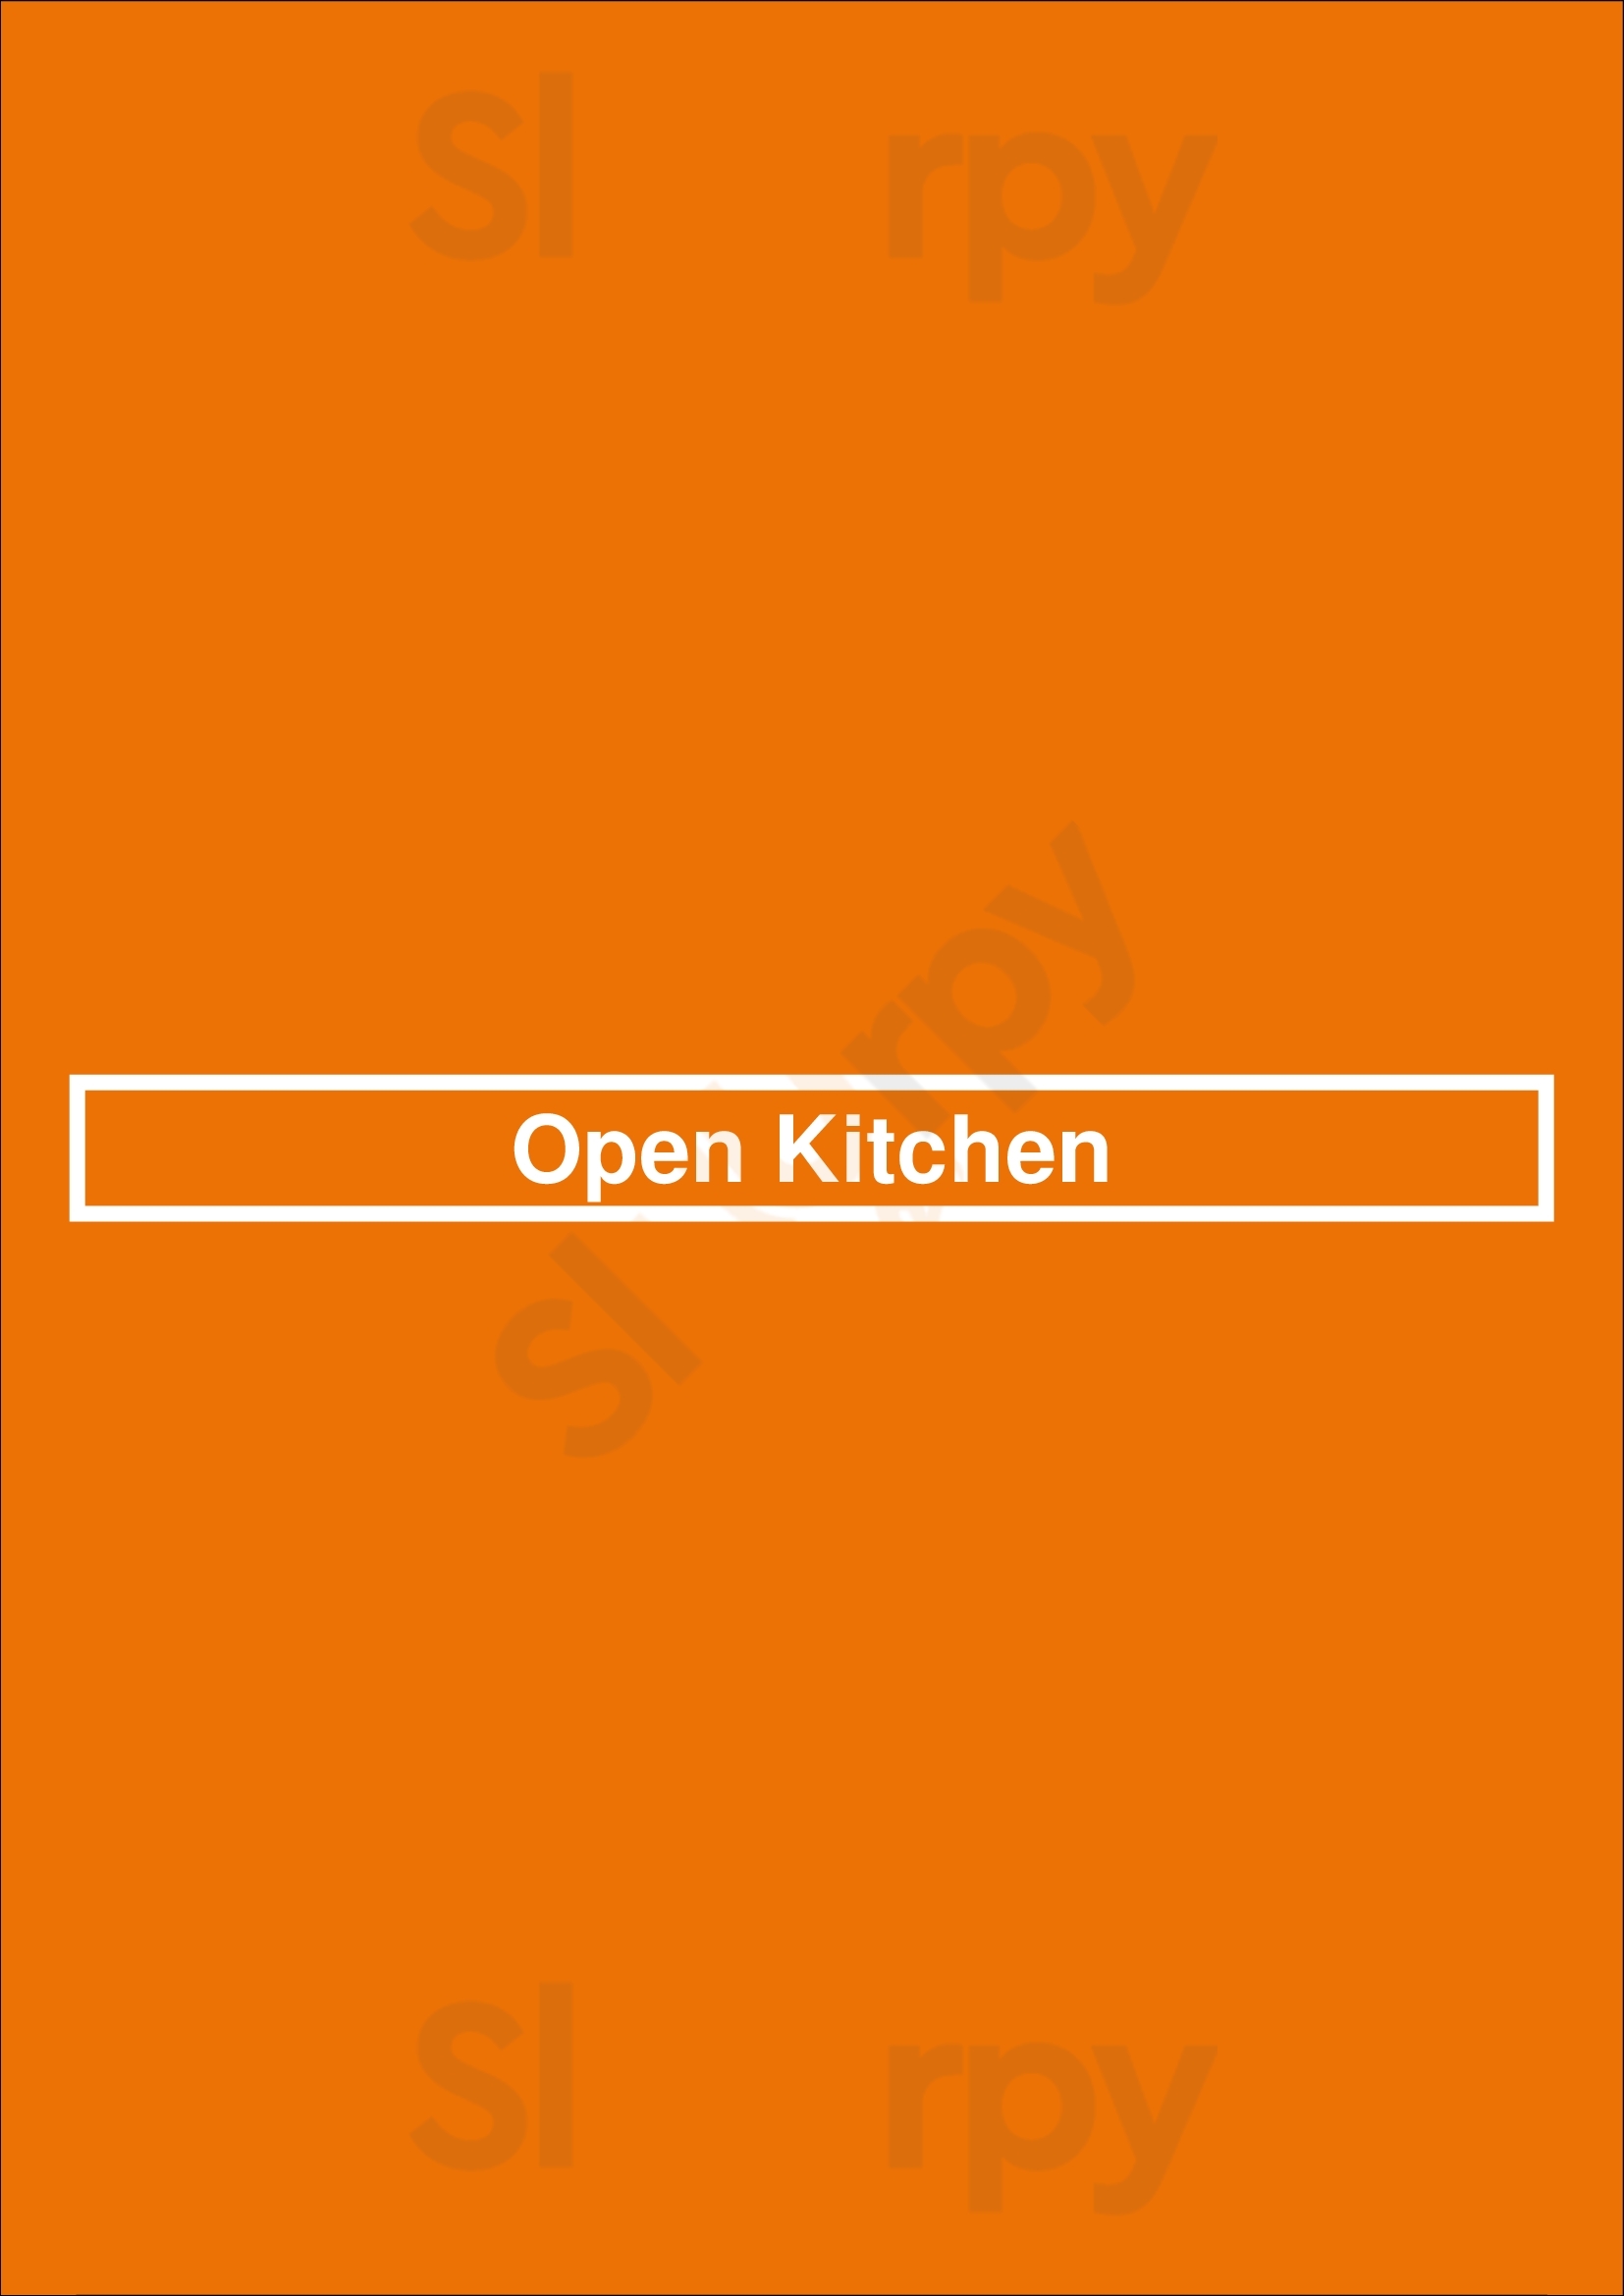 Open Kitchen Porto Menu - 1